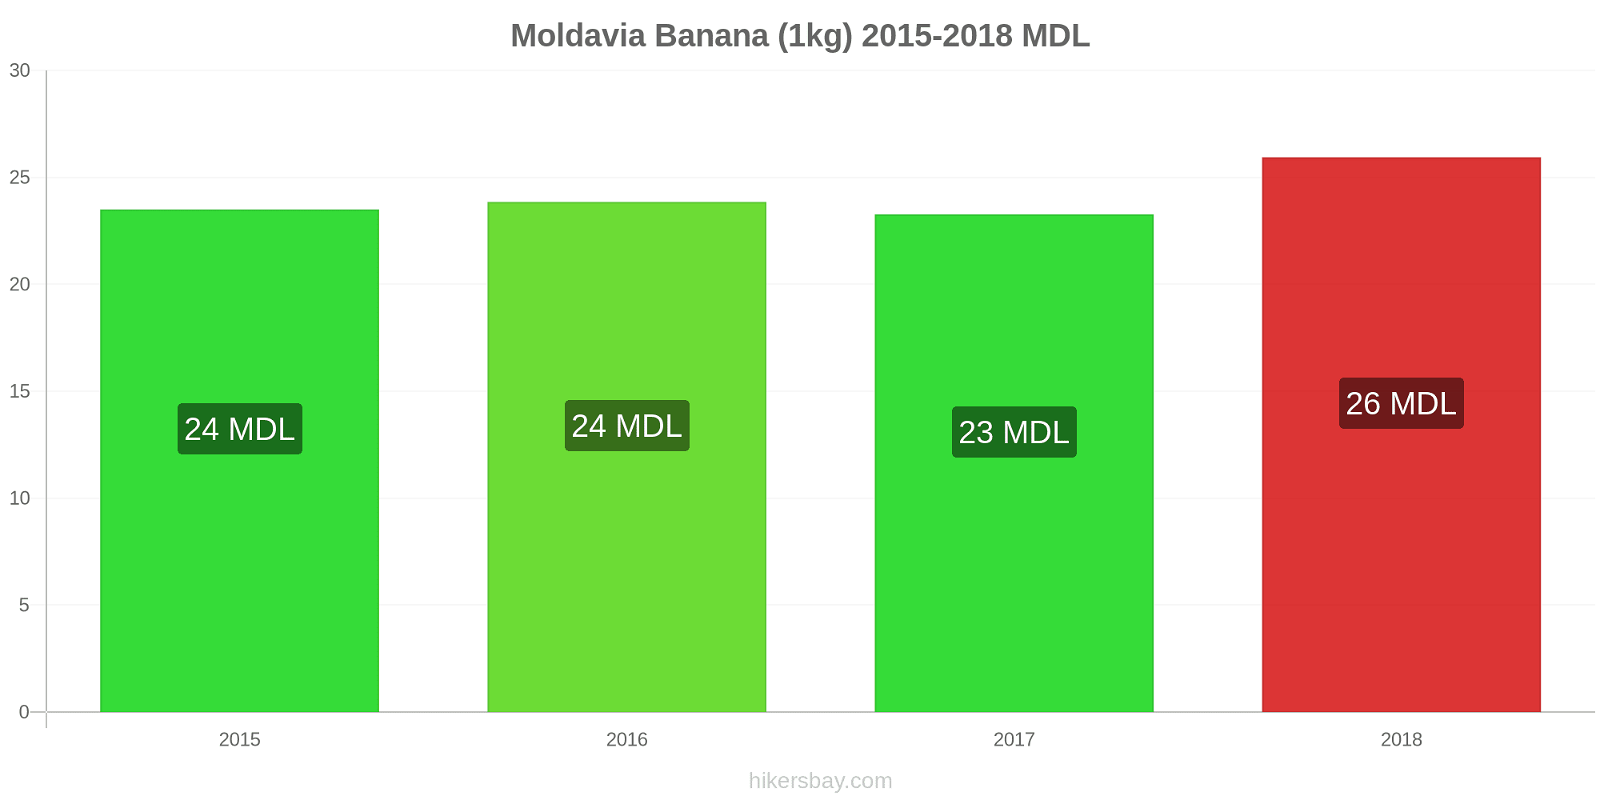 Moldavia cambi di prezzo Banane (1kg) hikersbay.com